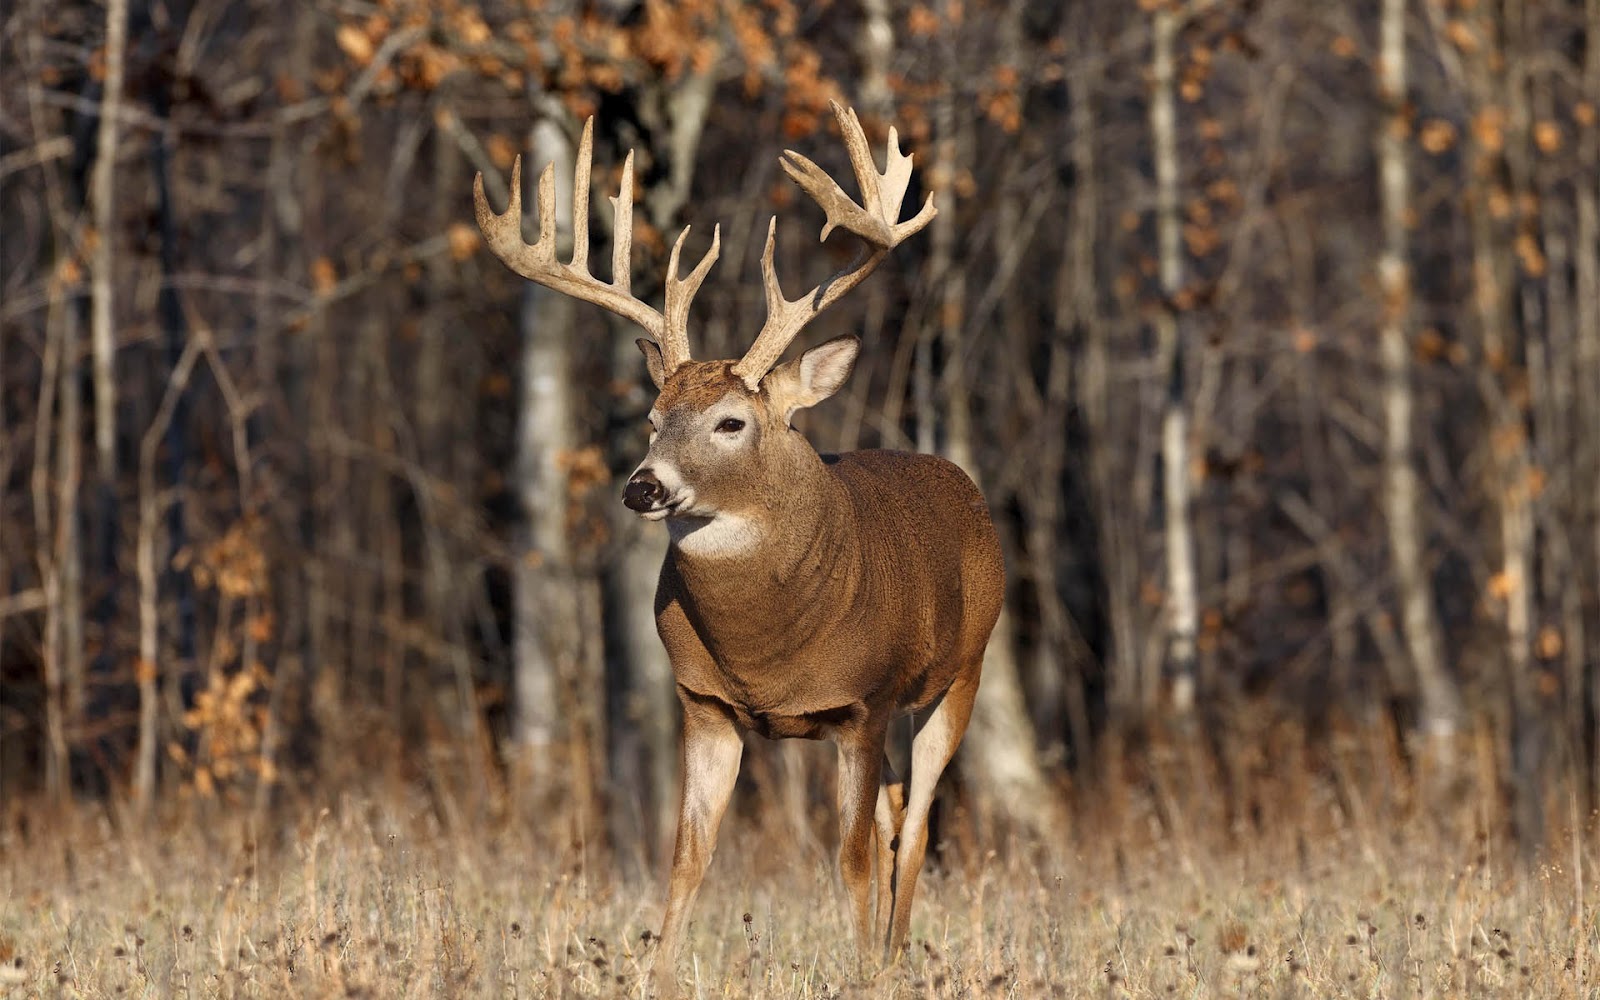 Deer Hunting Pictures  Download Free Images on Unsplash